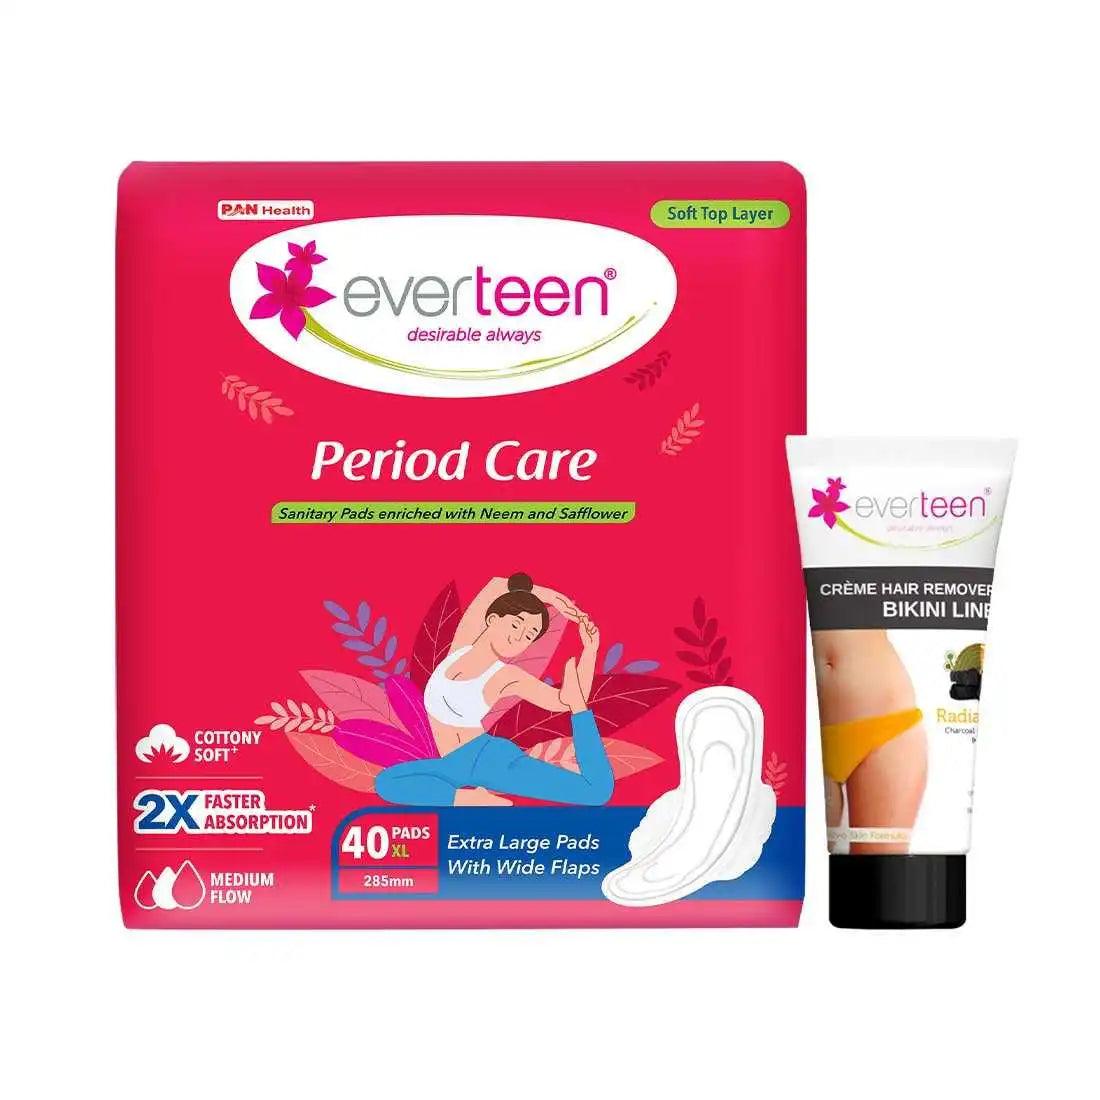 Buy everteen Period Care XL Soft 40 Pads and Radiance Bikini Line Hair Remover Cream 50g 7419870349899 - everteen-neud.com